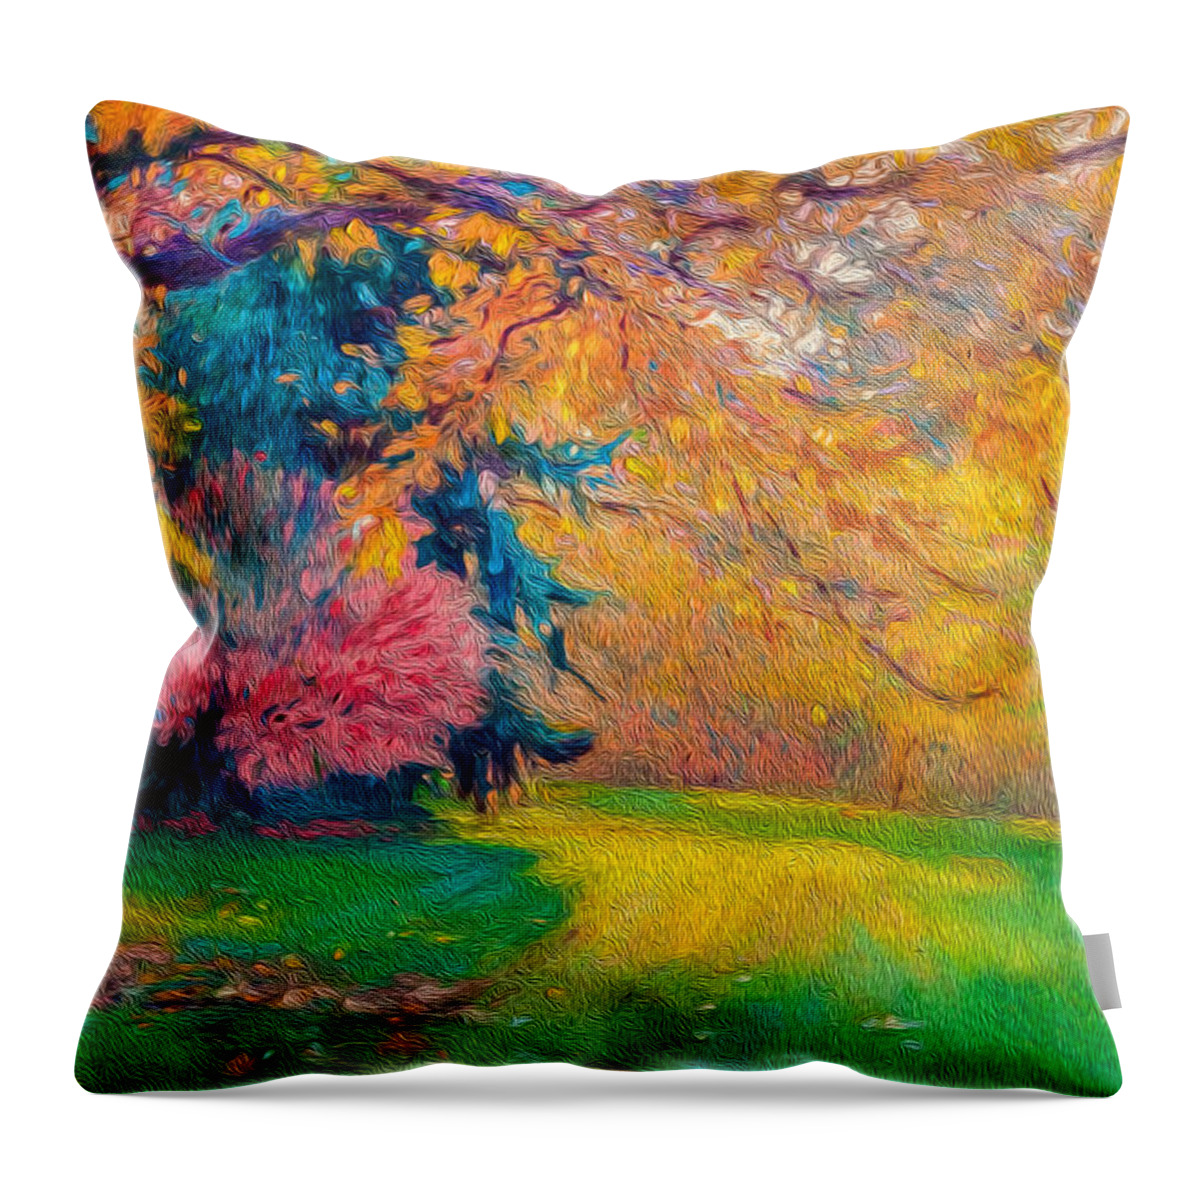 Fall Yard Throw Pillow featuring the digital art Brook Forest Garden at Fall by Judith Barath